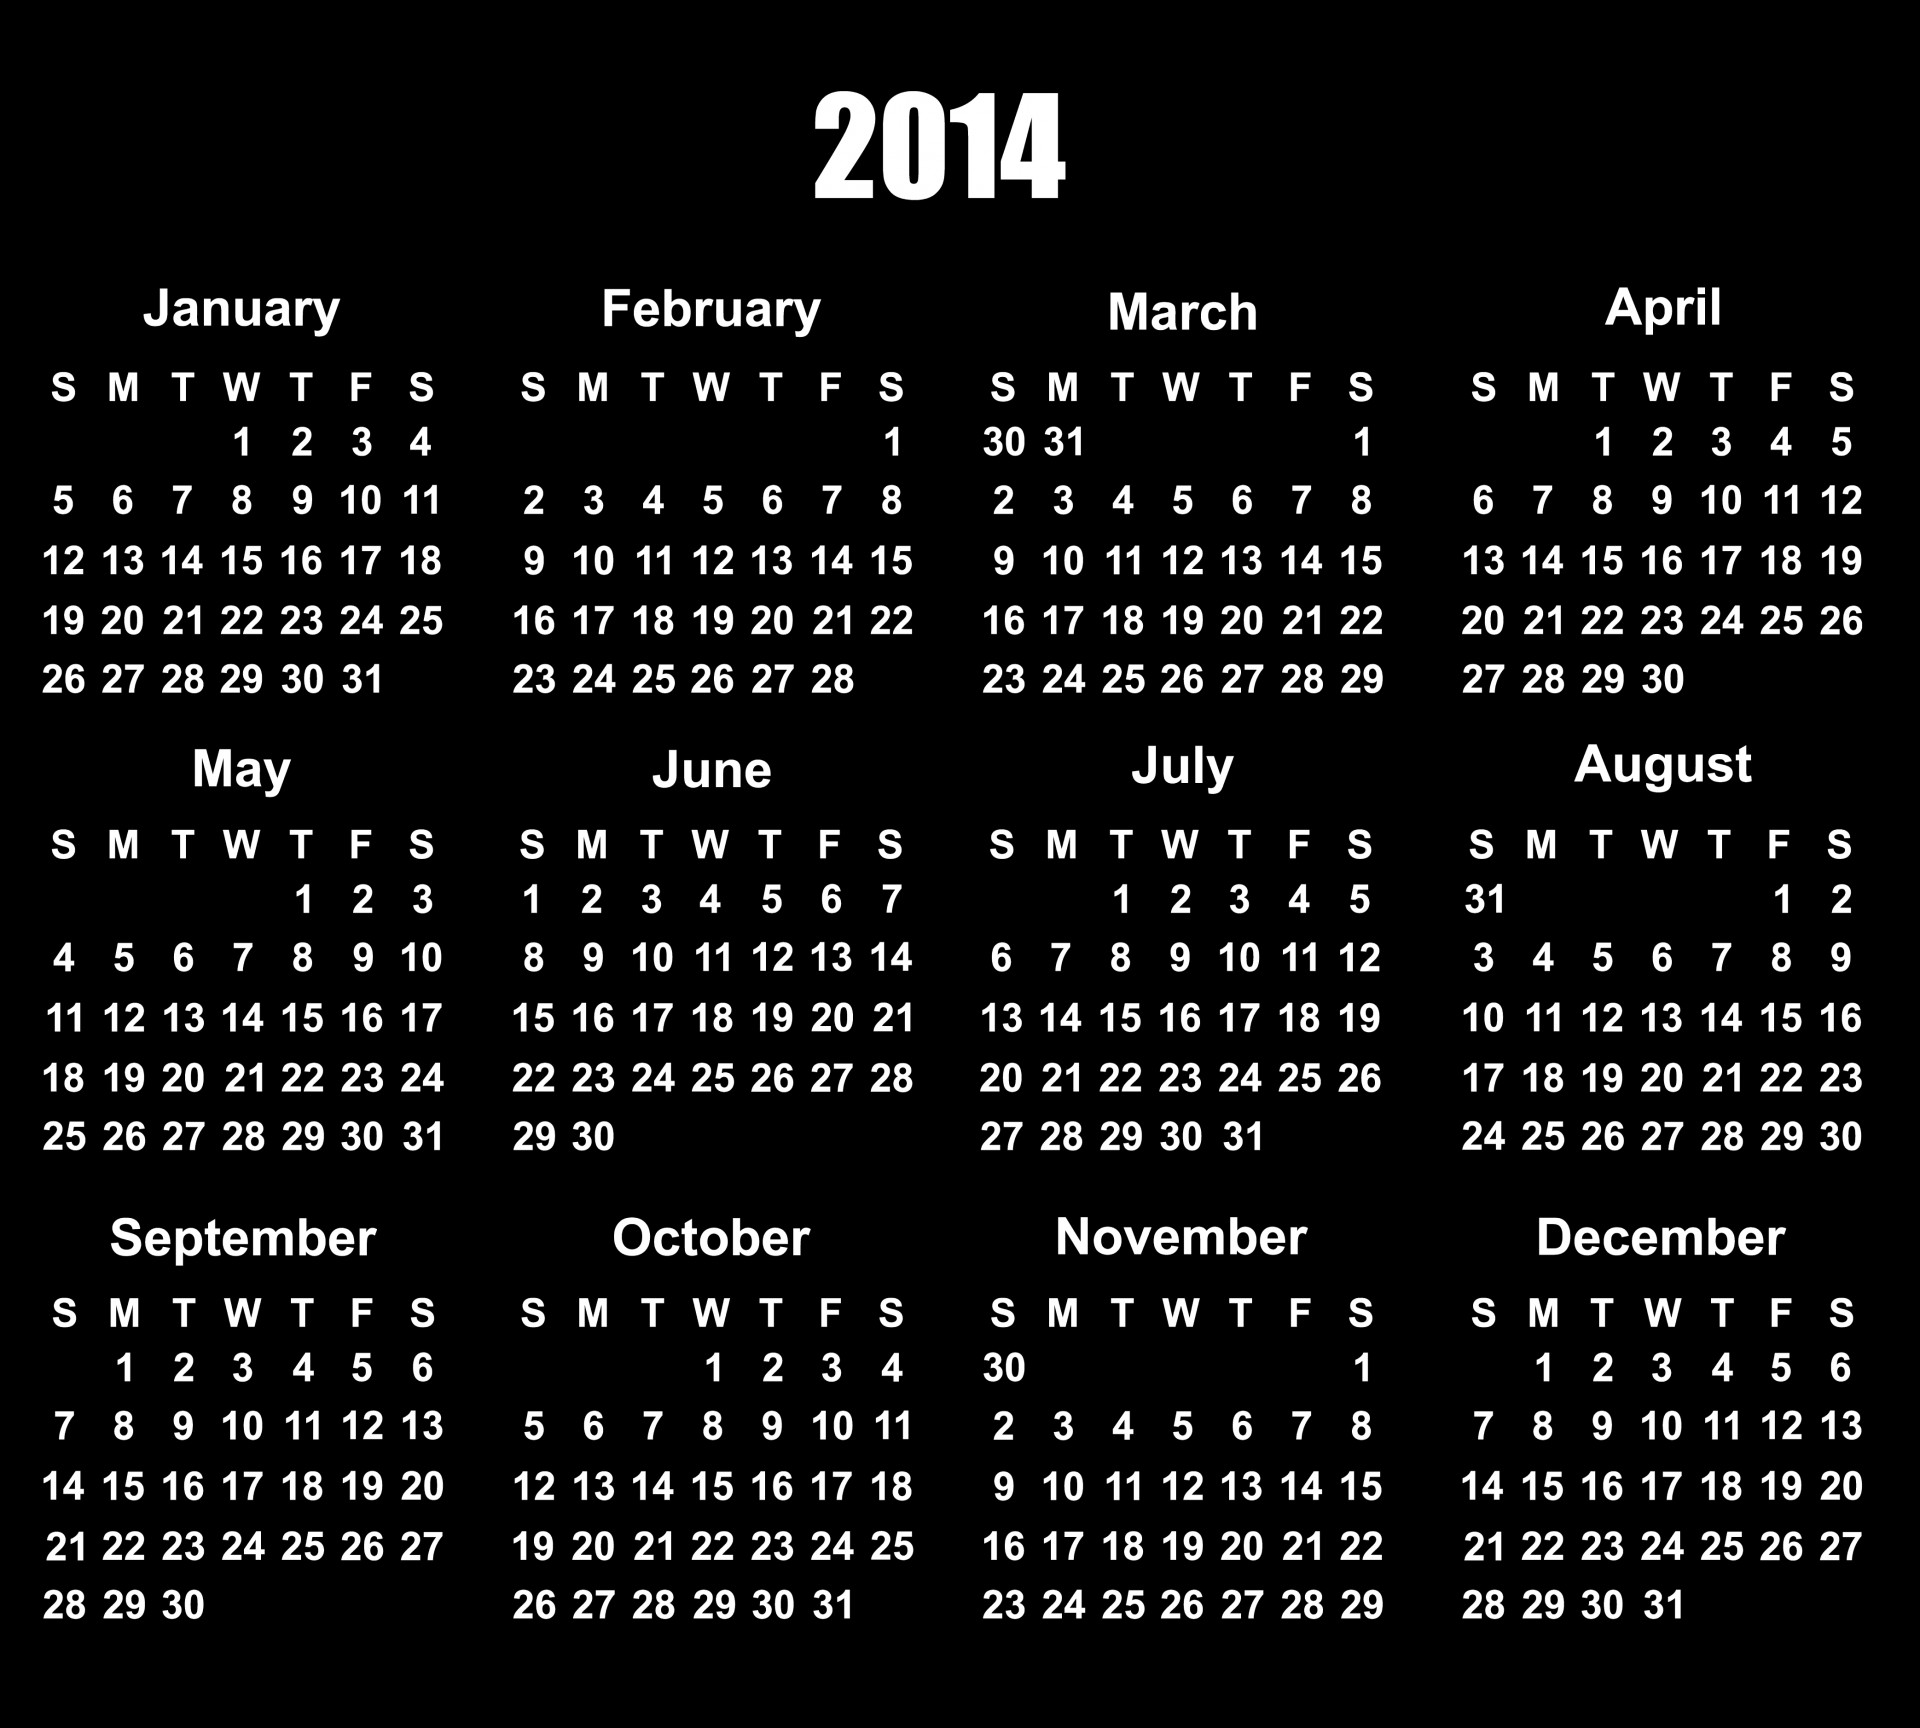 Basic 2014 Calendar template in white on black background